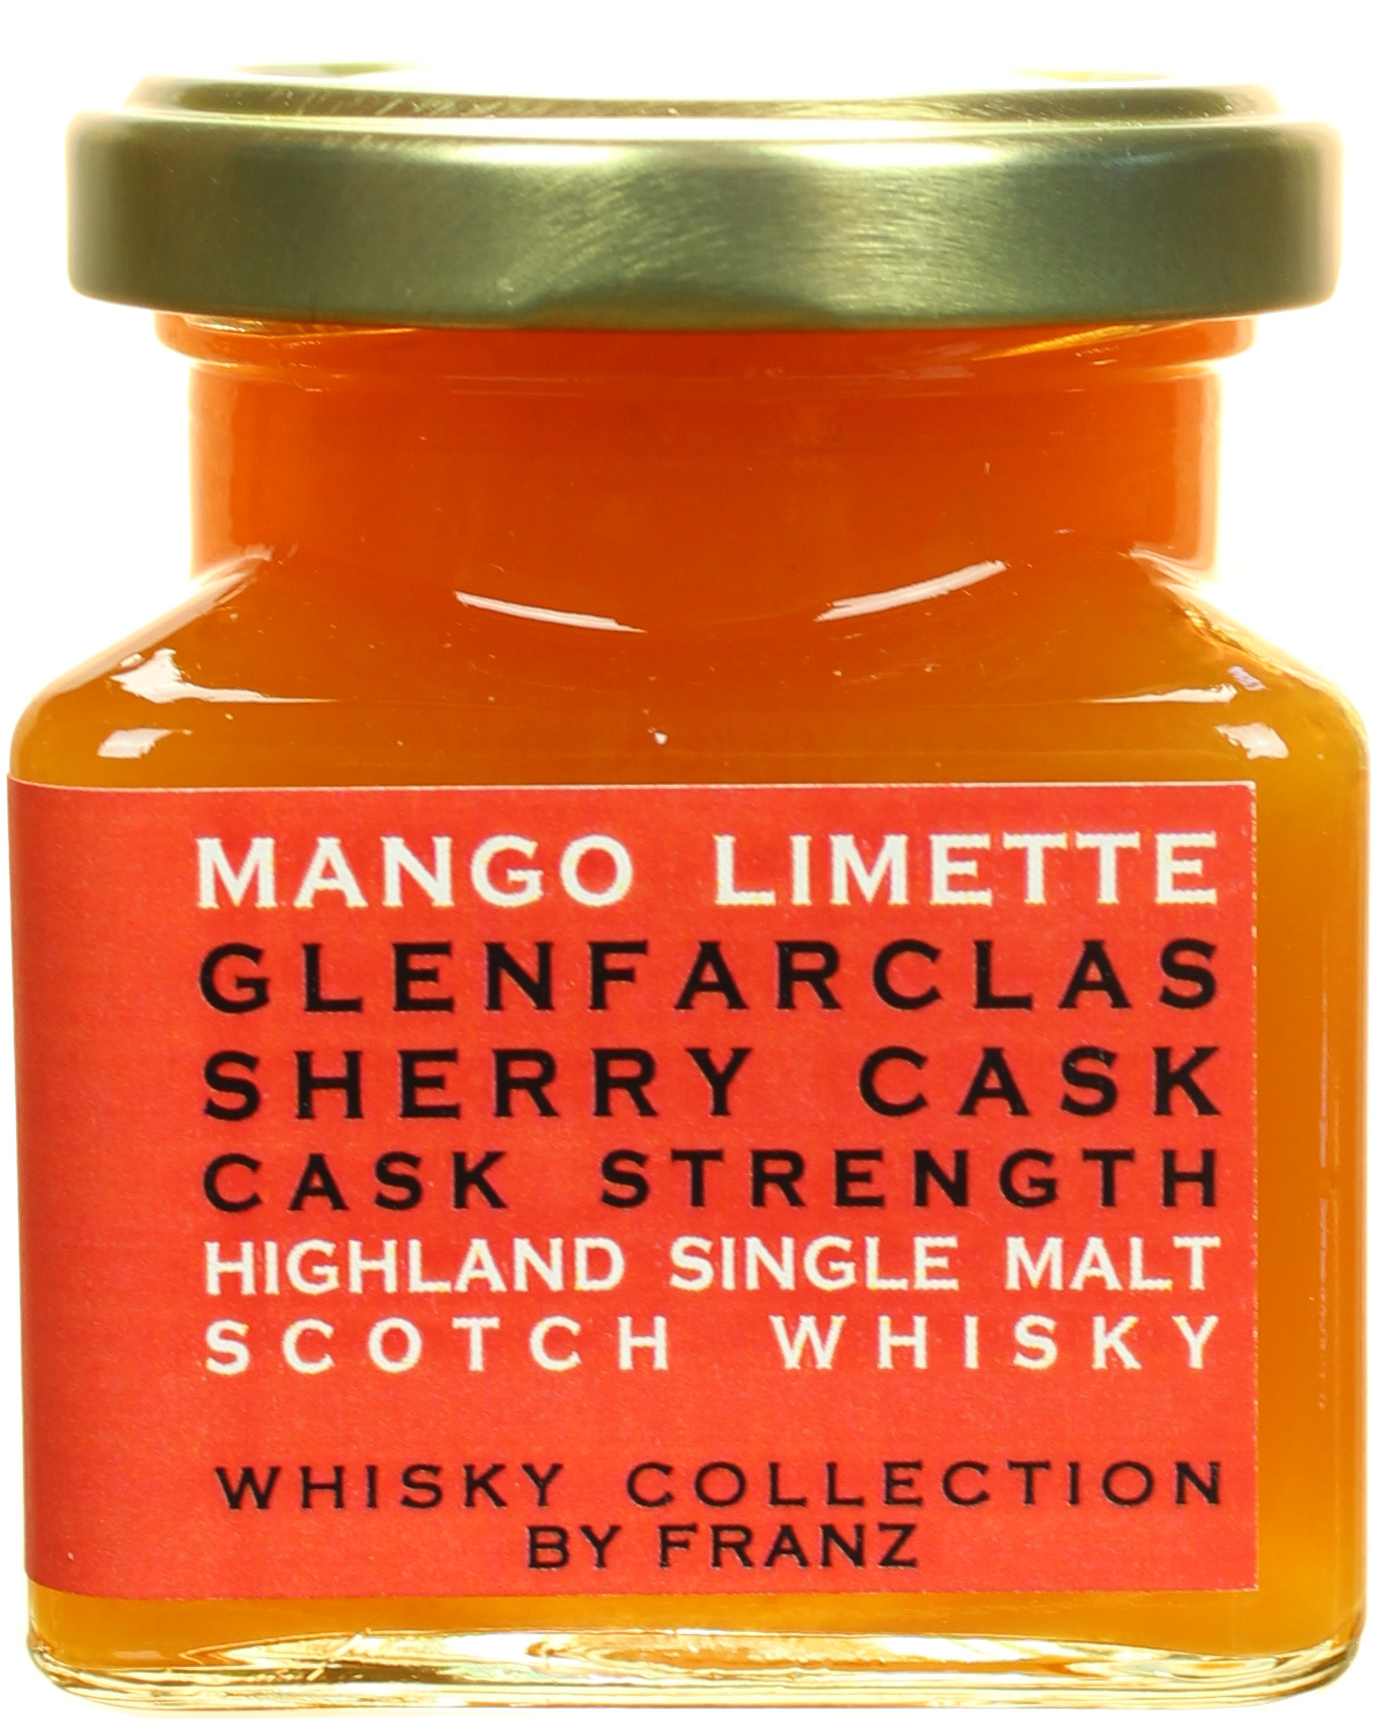 Mango-Limette mit Glenfarclas Oloroso Sherry Cask 150g